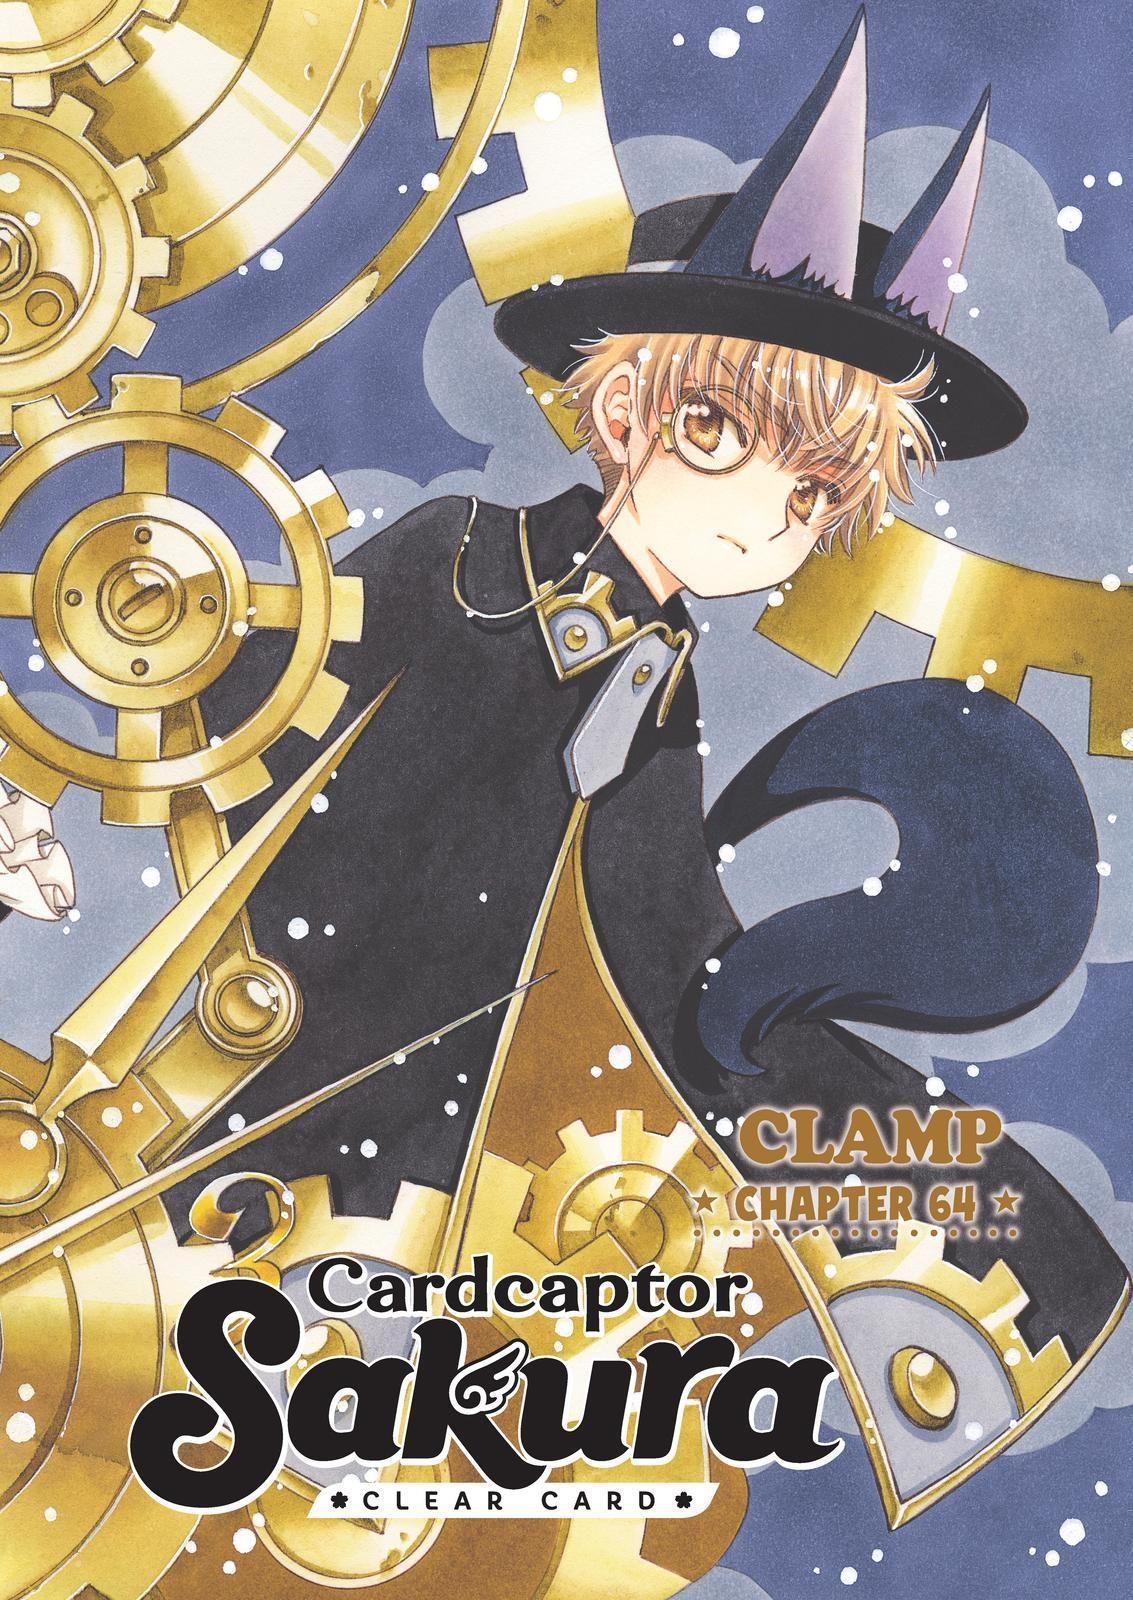 Cardcaptor Sakura - Clear Card Arc 7 Page 1  Cardcaptor sakura, Sakura card,  Clear card